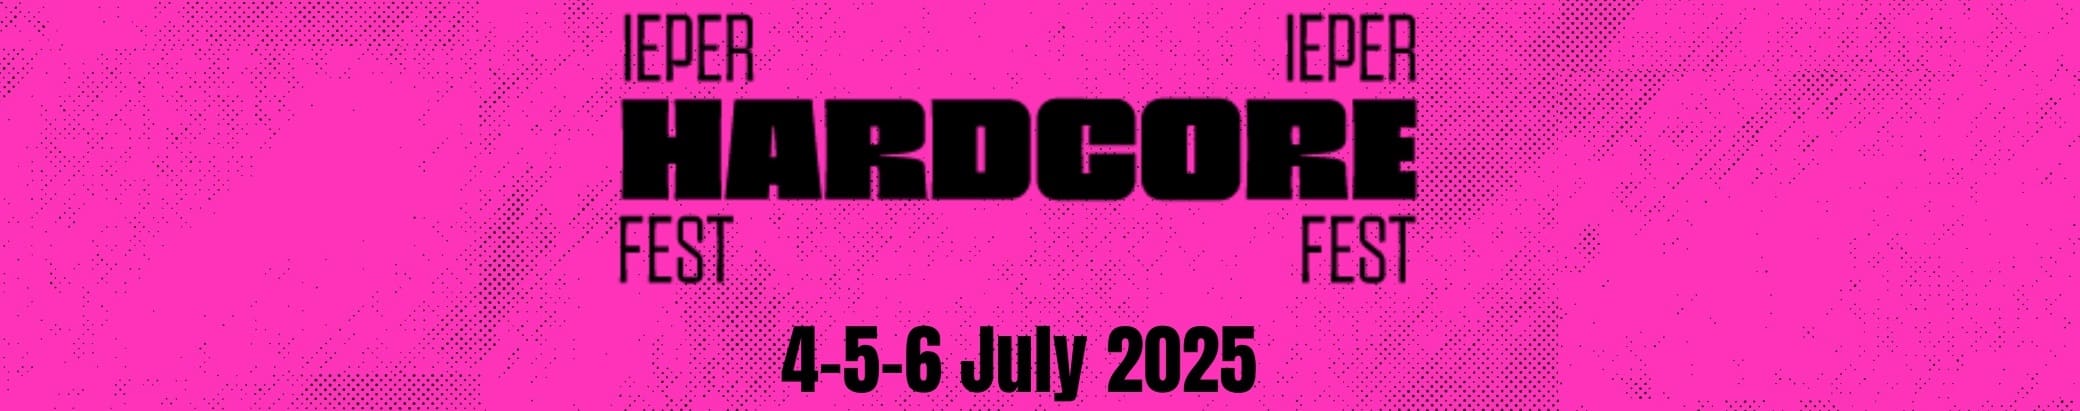 Ieper Hardcore Fest 2025